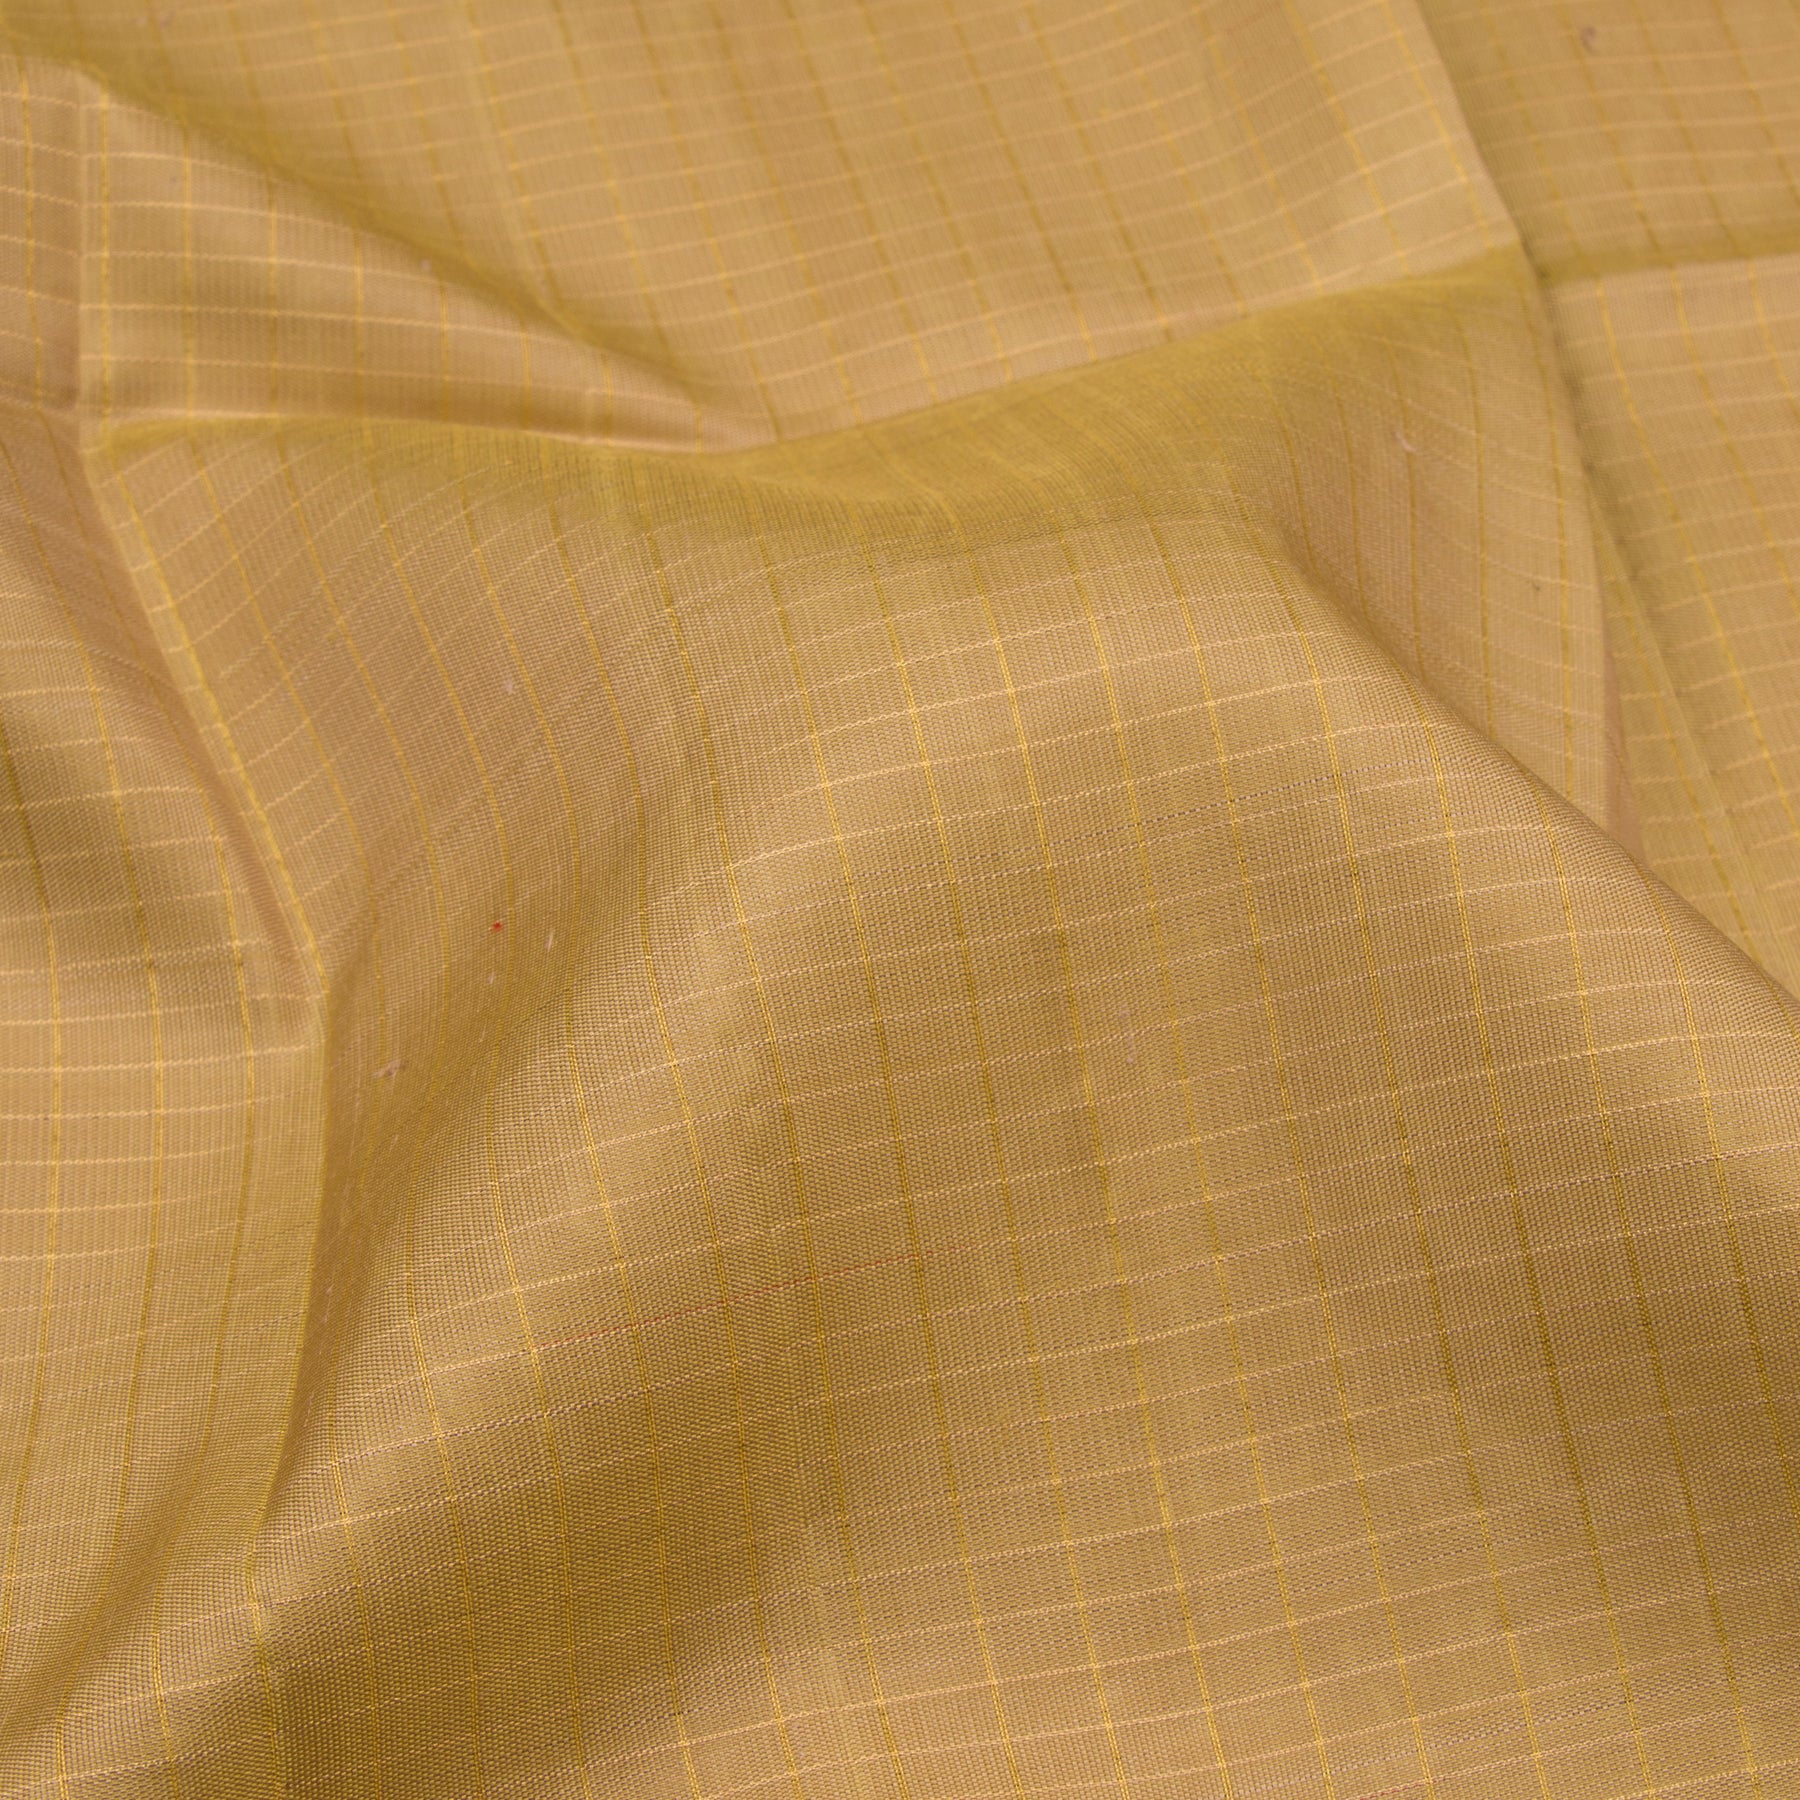 Kanakavalli Kattam - Vari Silk Blouse Length 040-06-67826 - Fabric View